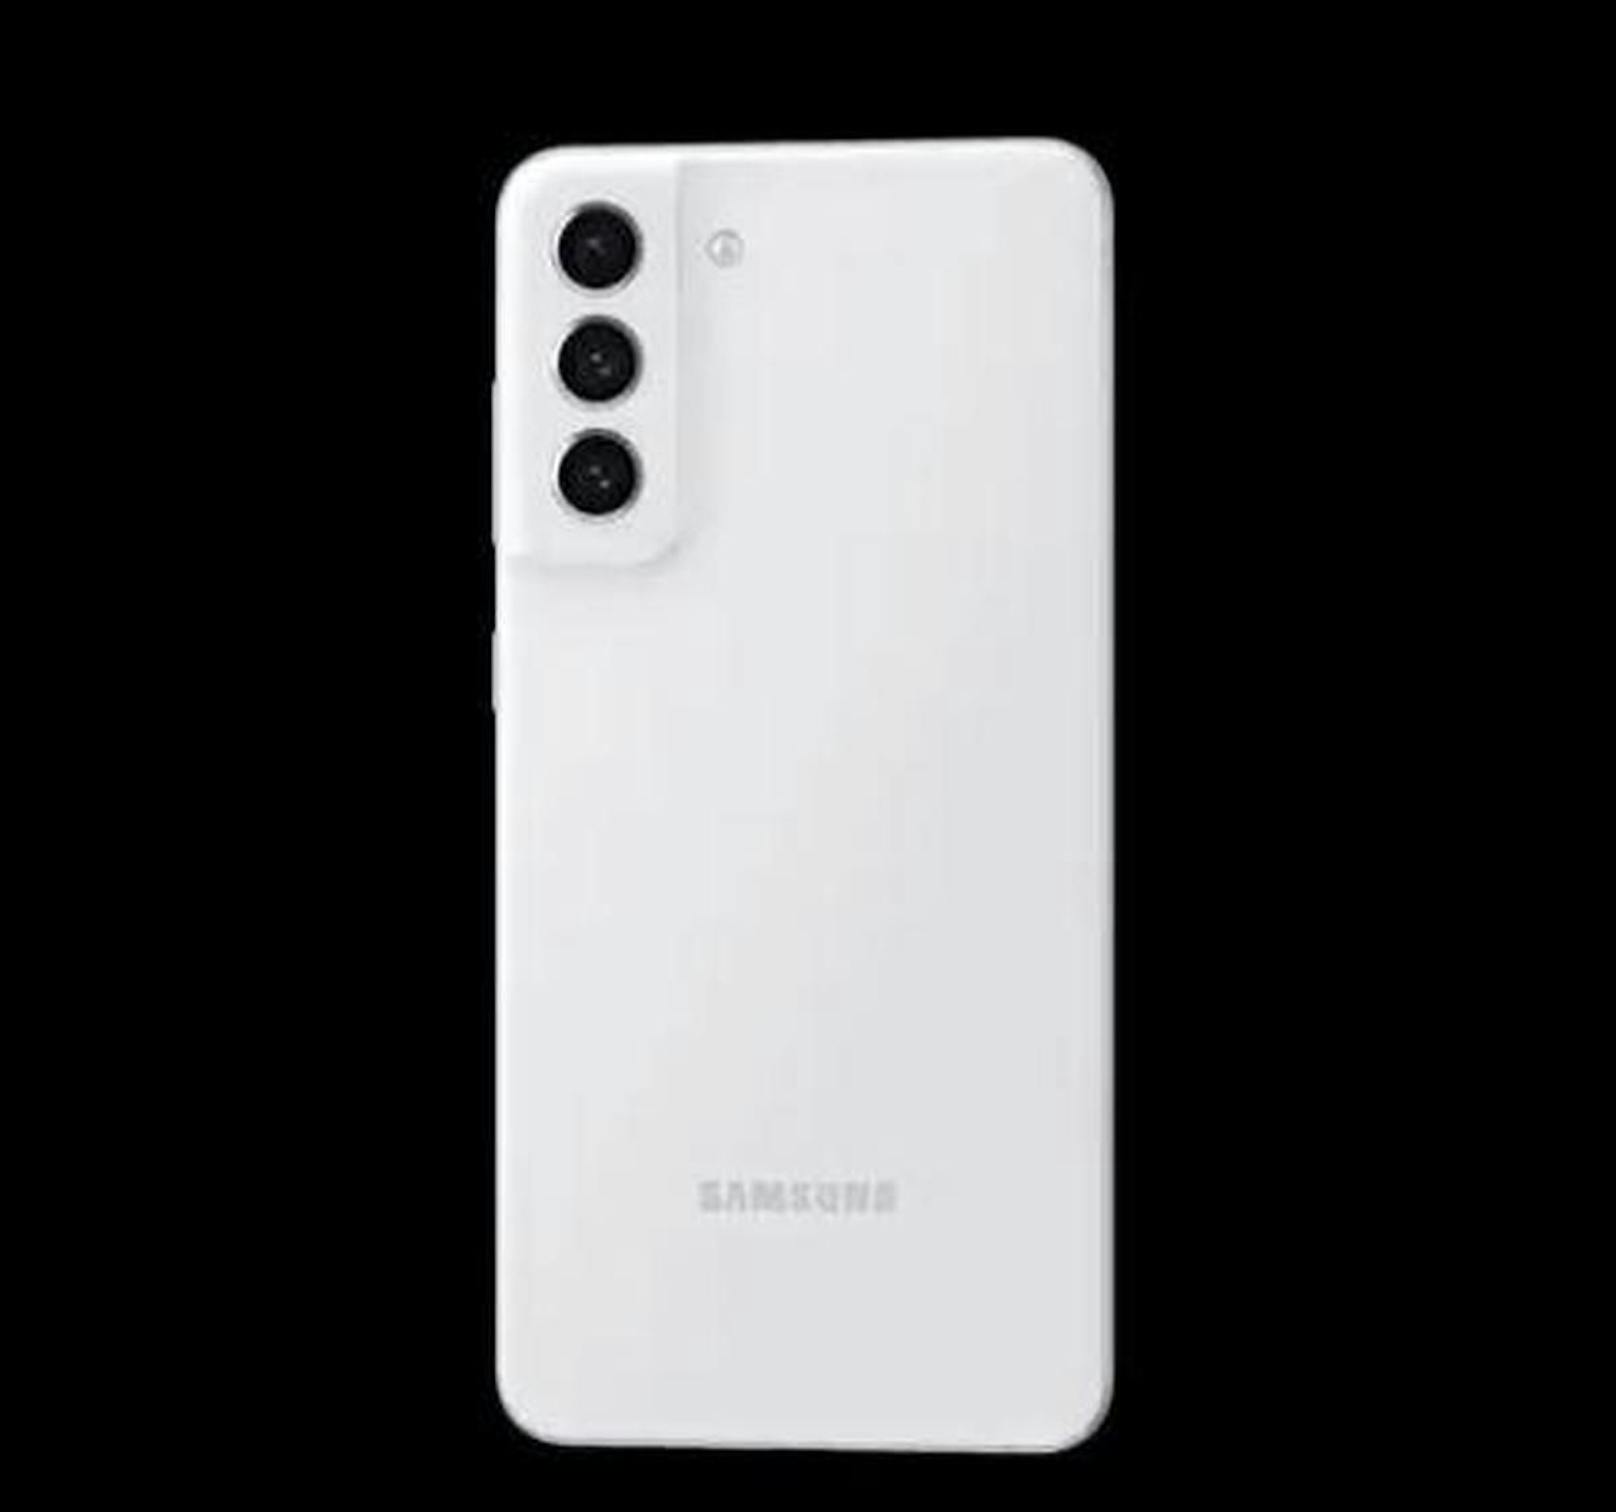 Neben den Falt-Phones soll Samsung auch das neue Samsung Galaxy S21 FE ankündigen.